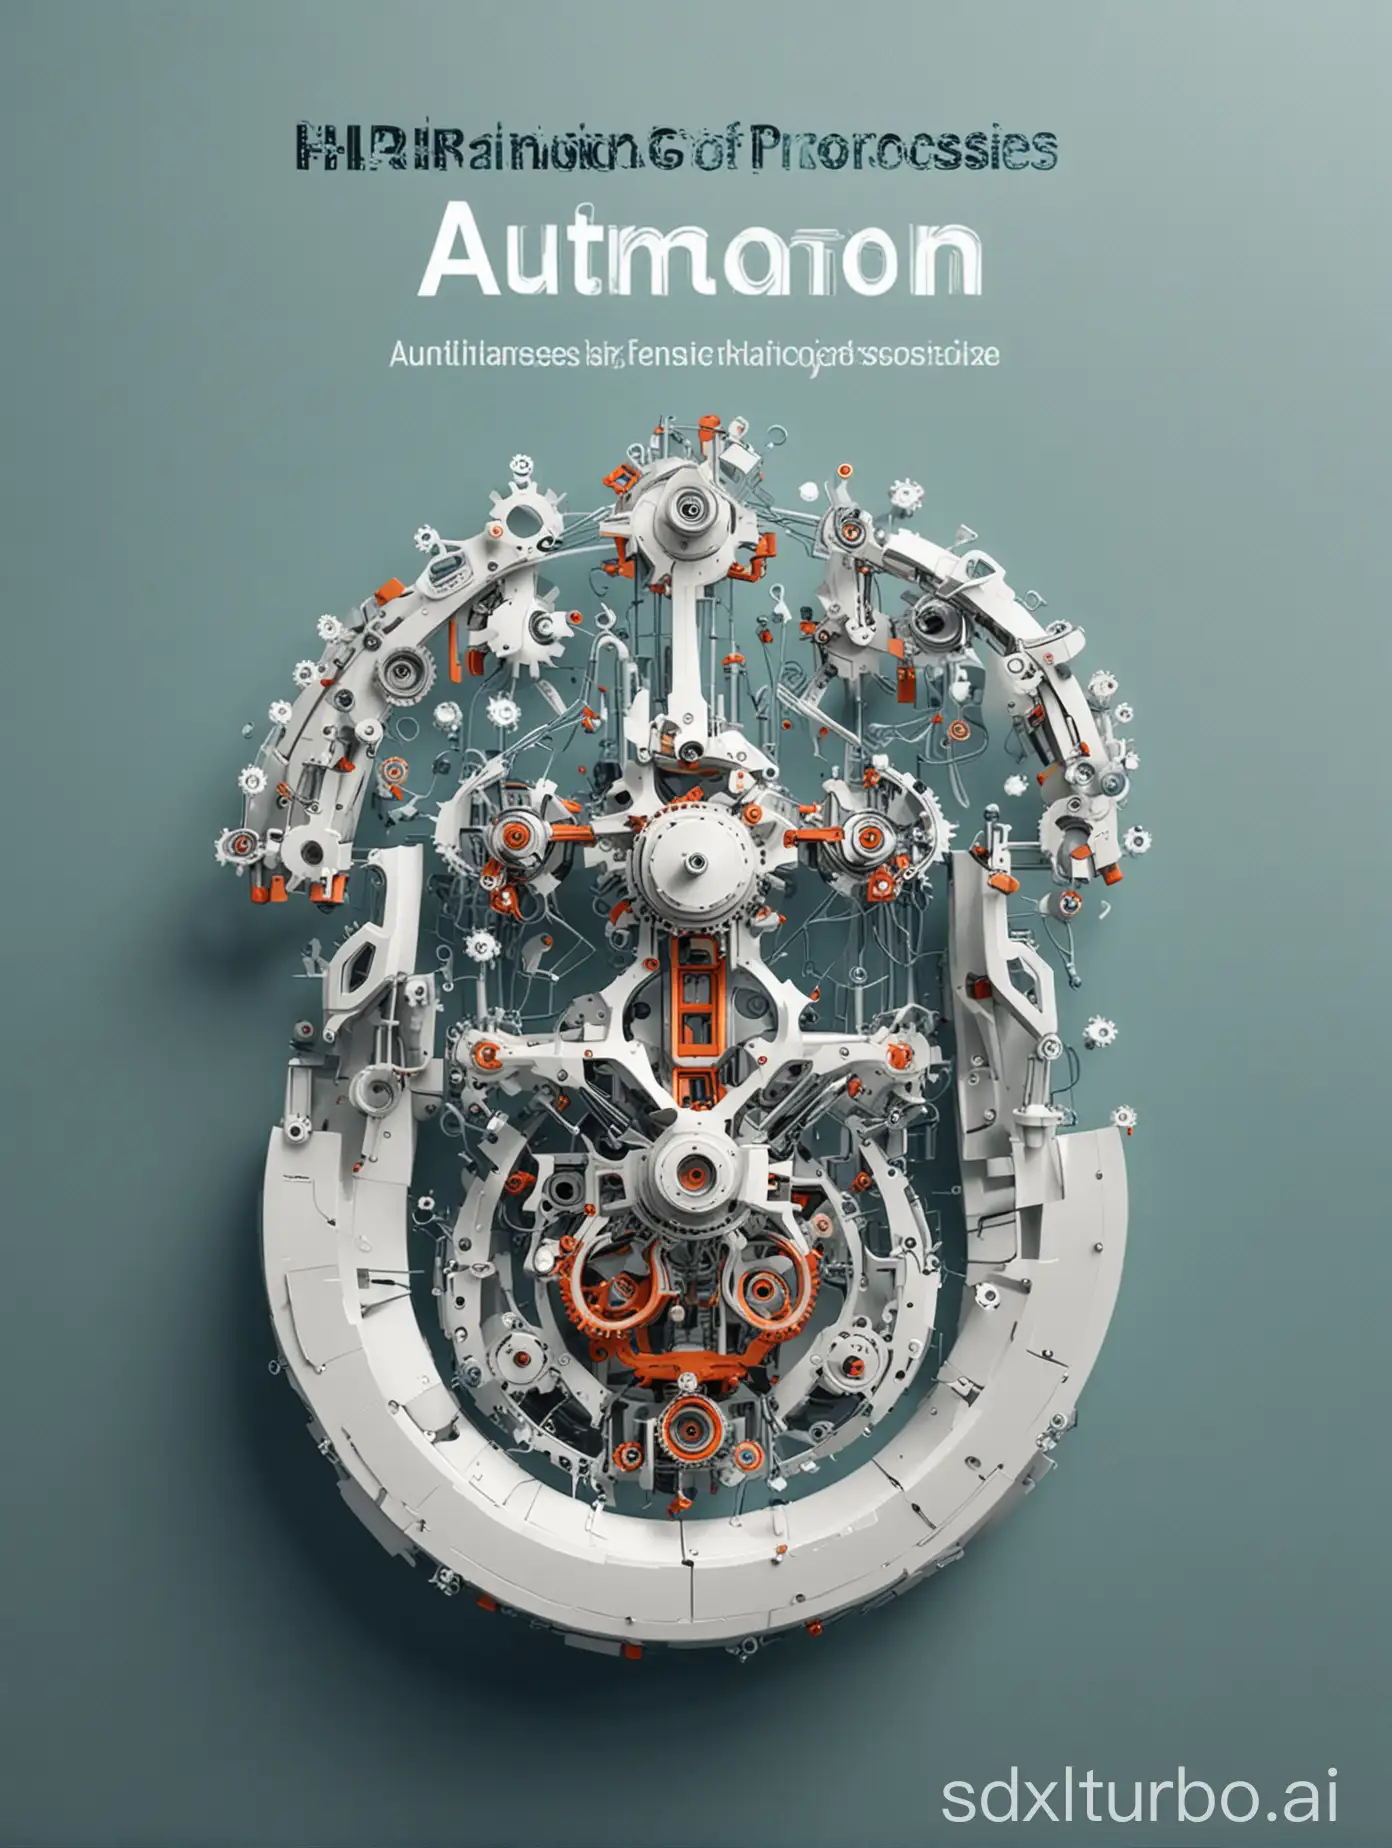 automation of HR processes,  scientific publication, cover page